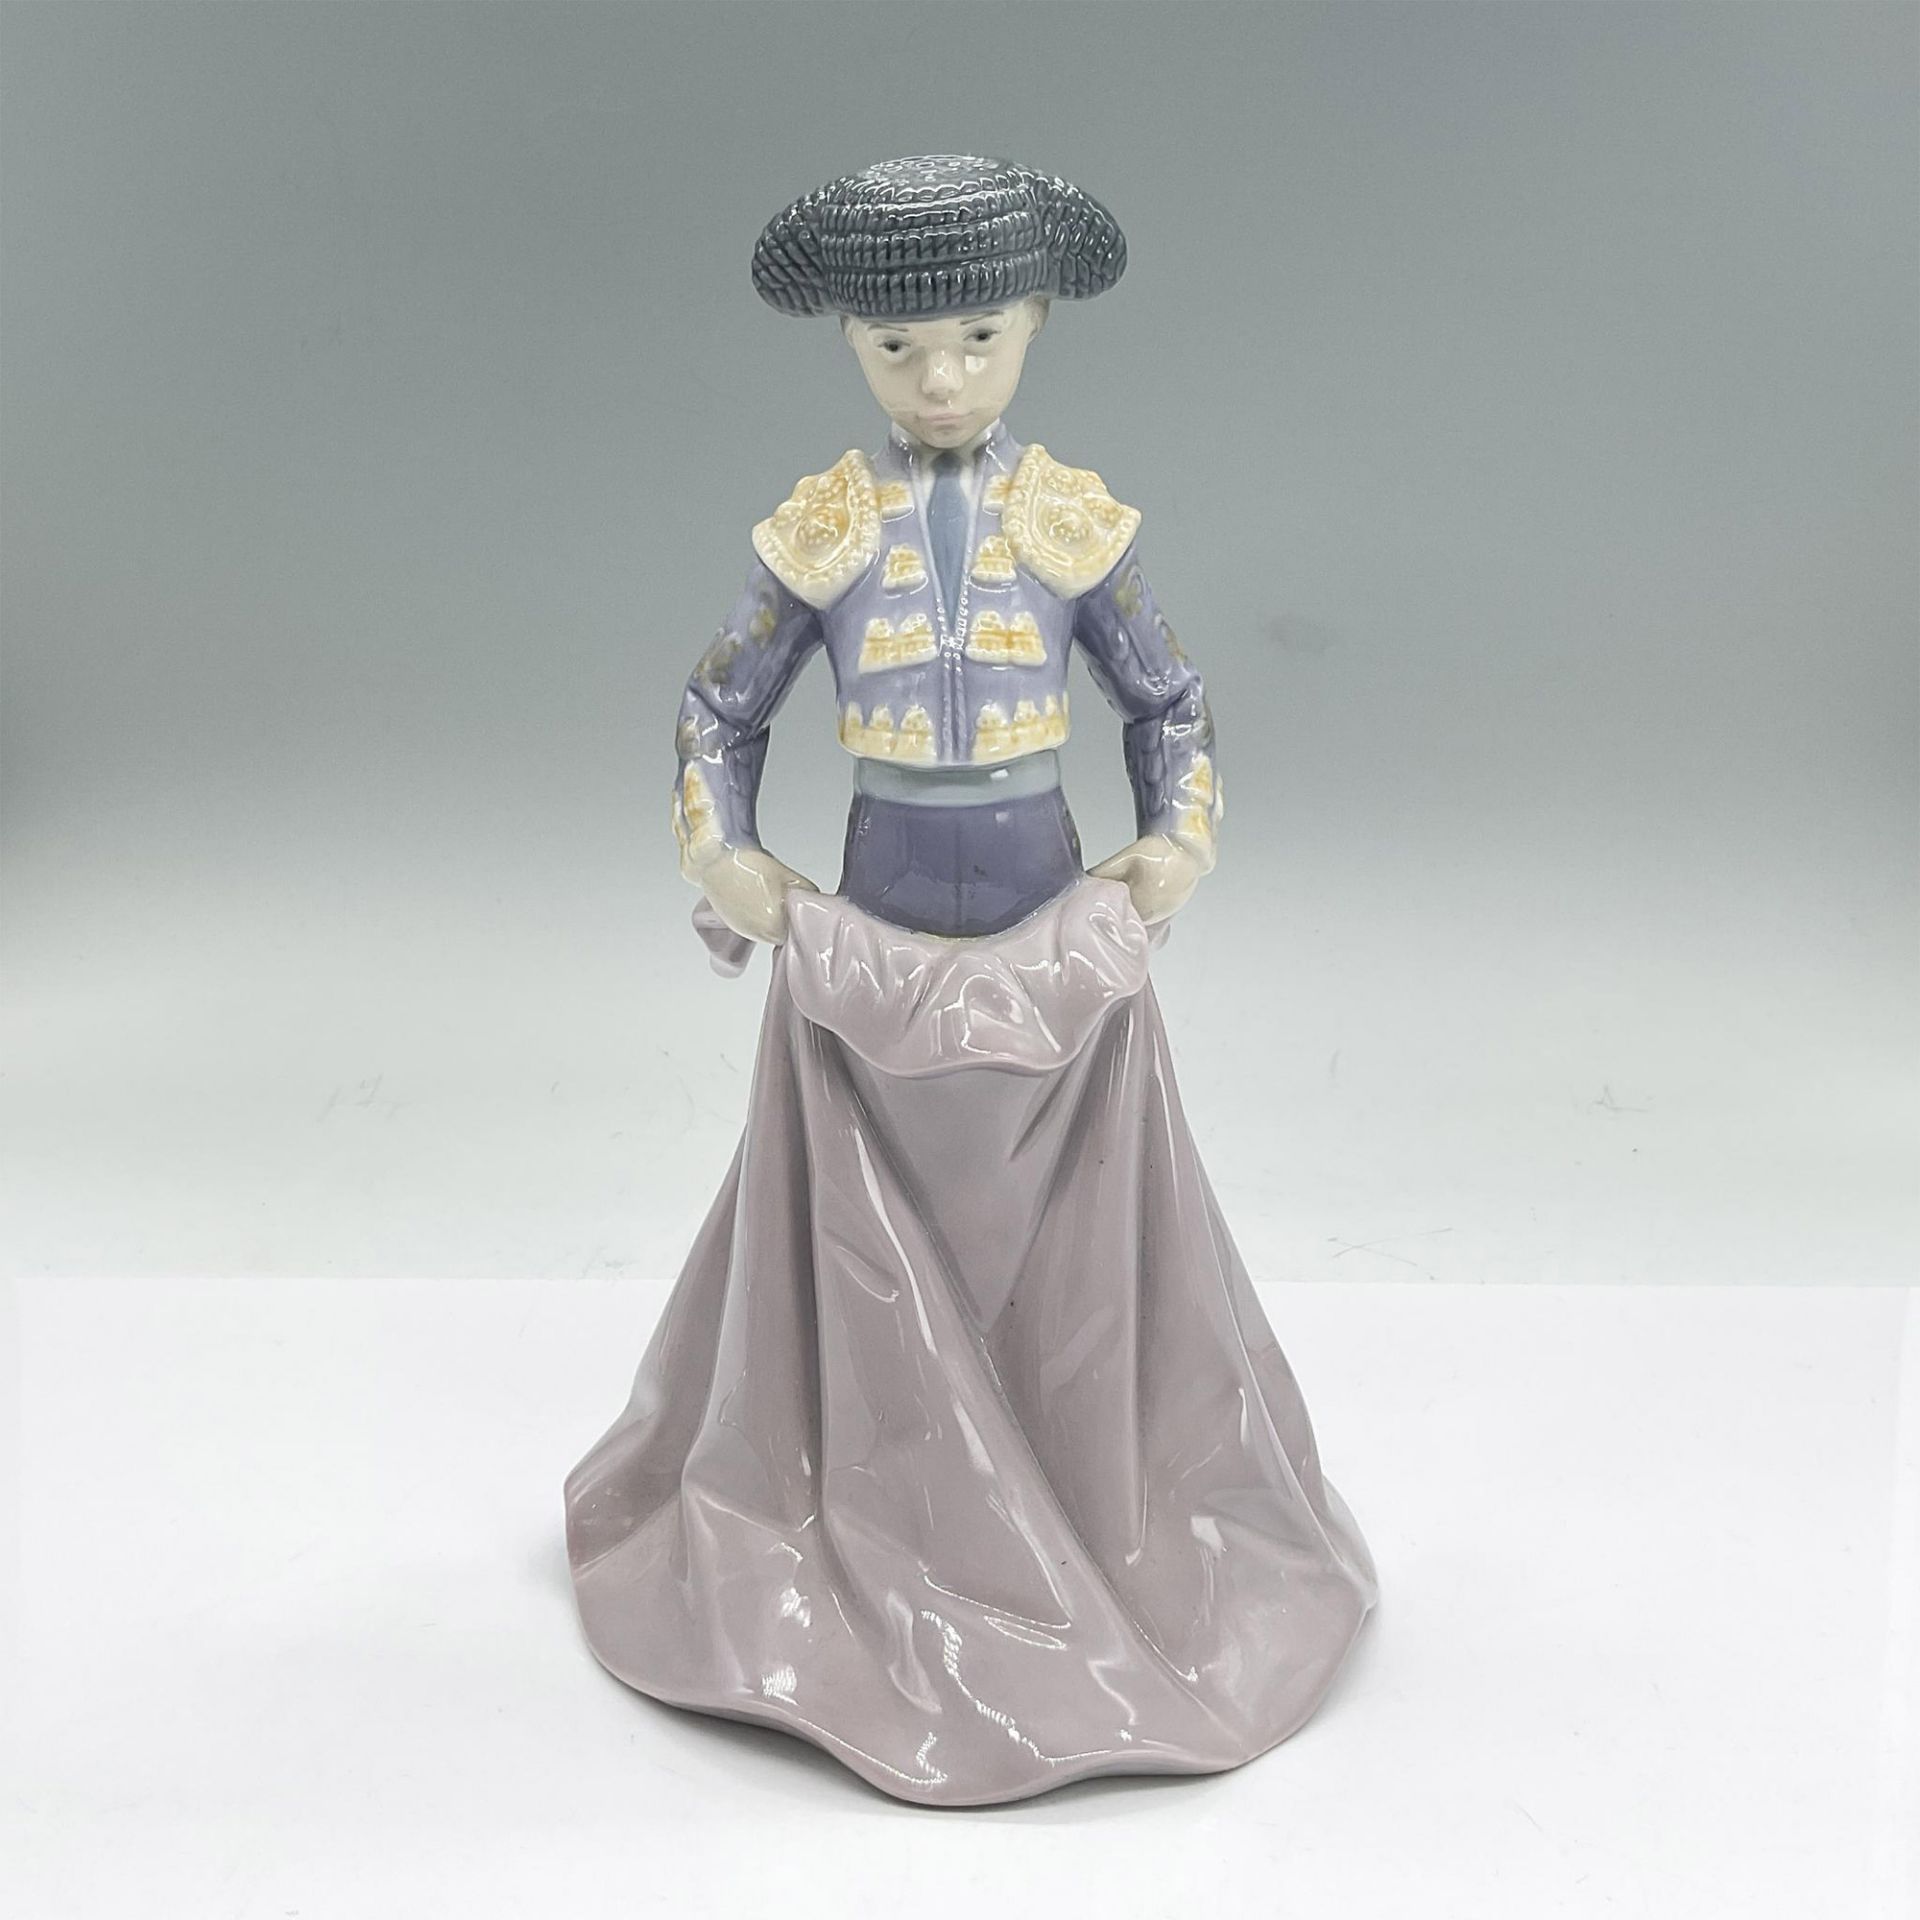 Young Torero 1006438 - Lladro Porcelain Figurine